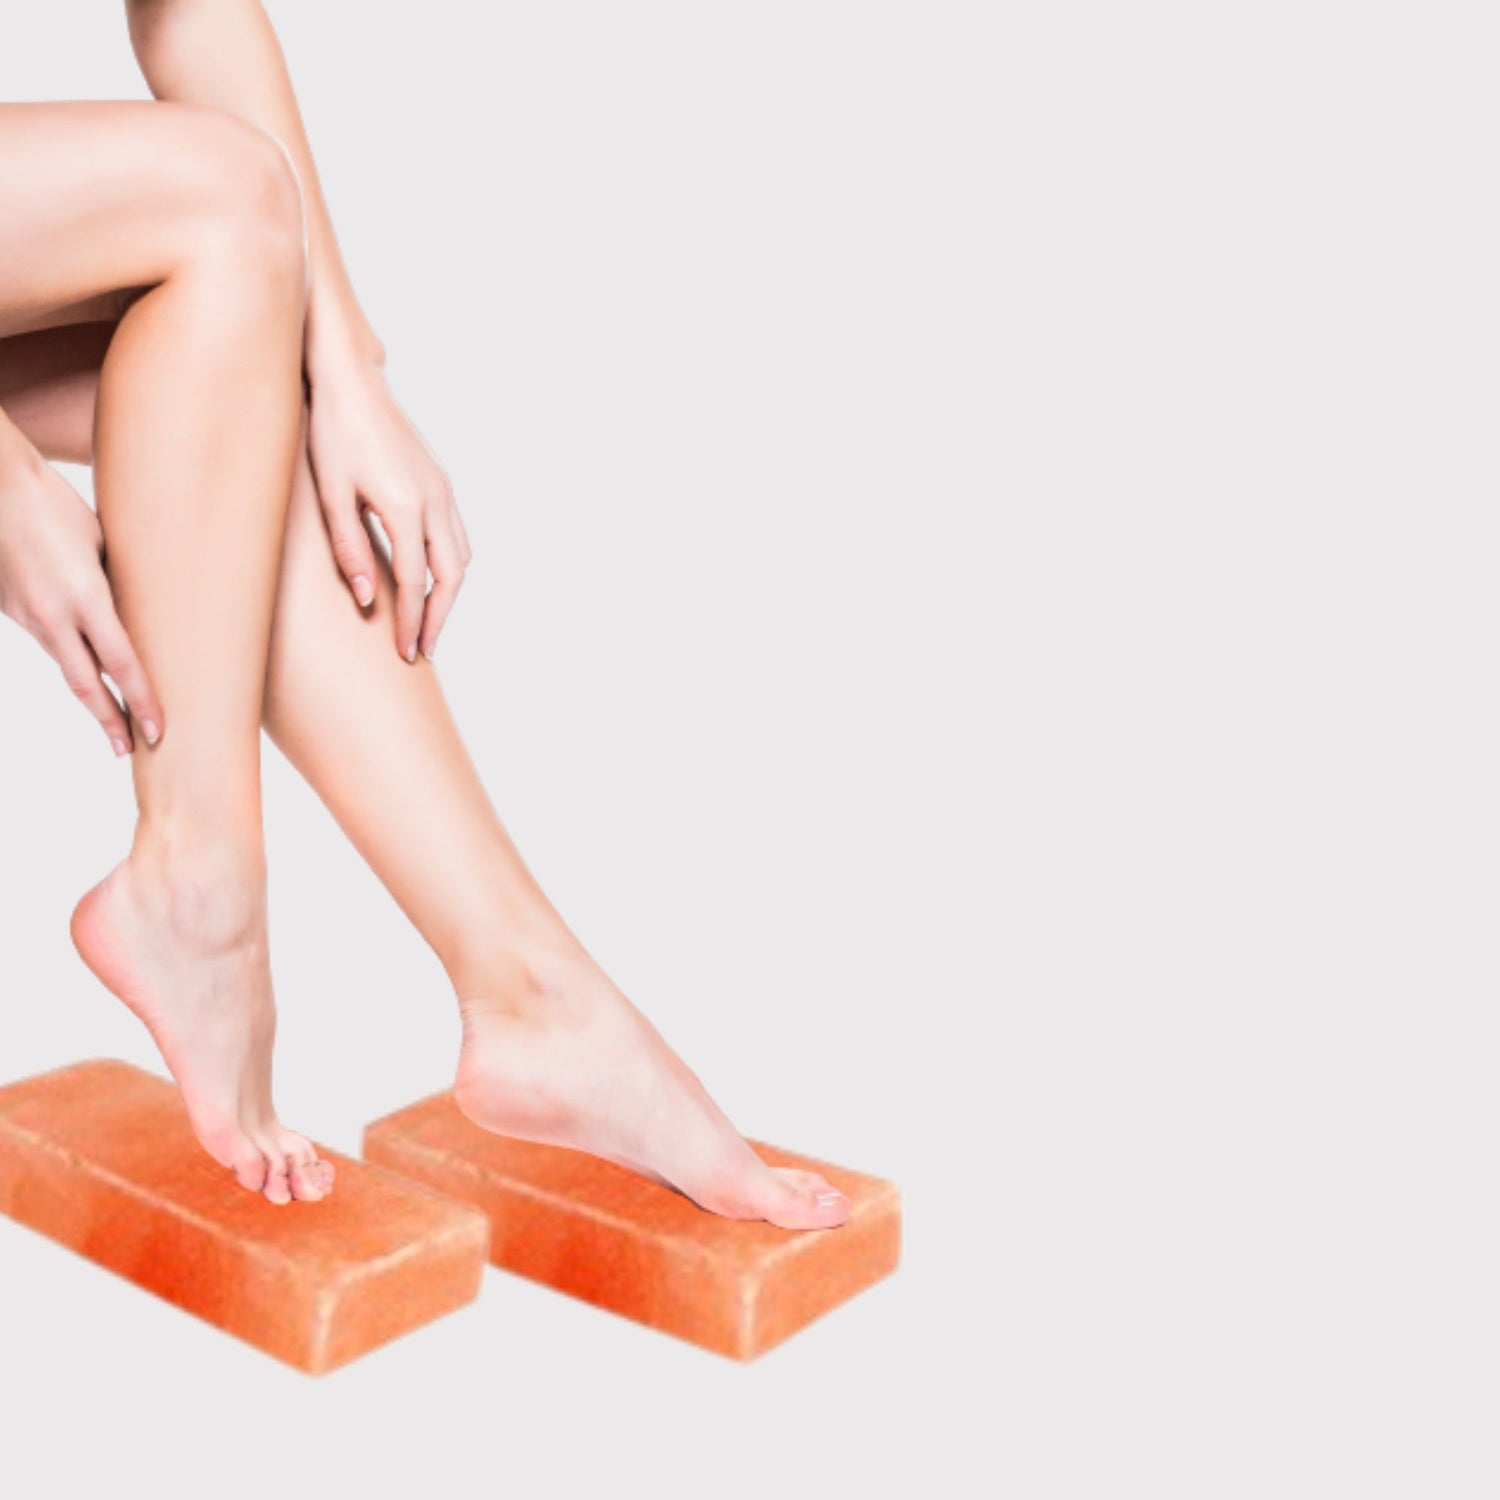 Salt foot detox blocks